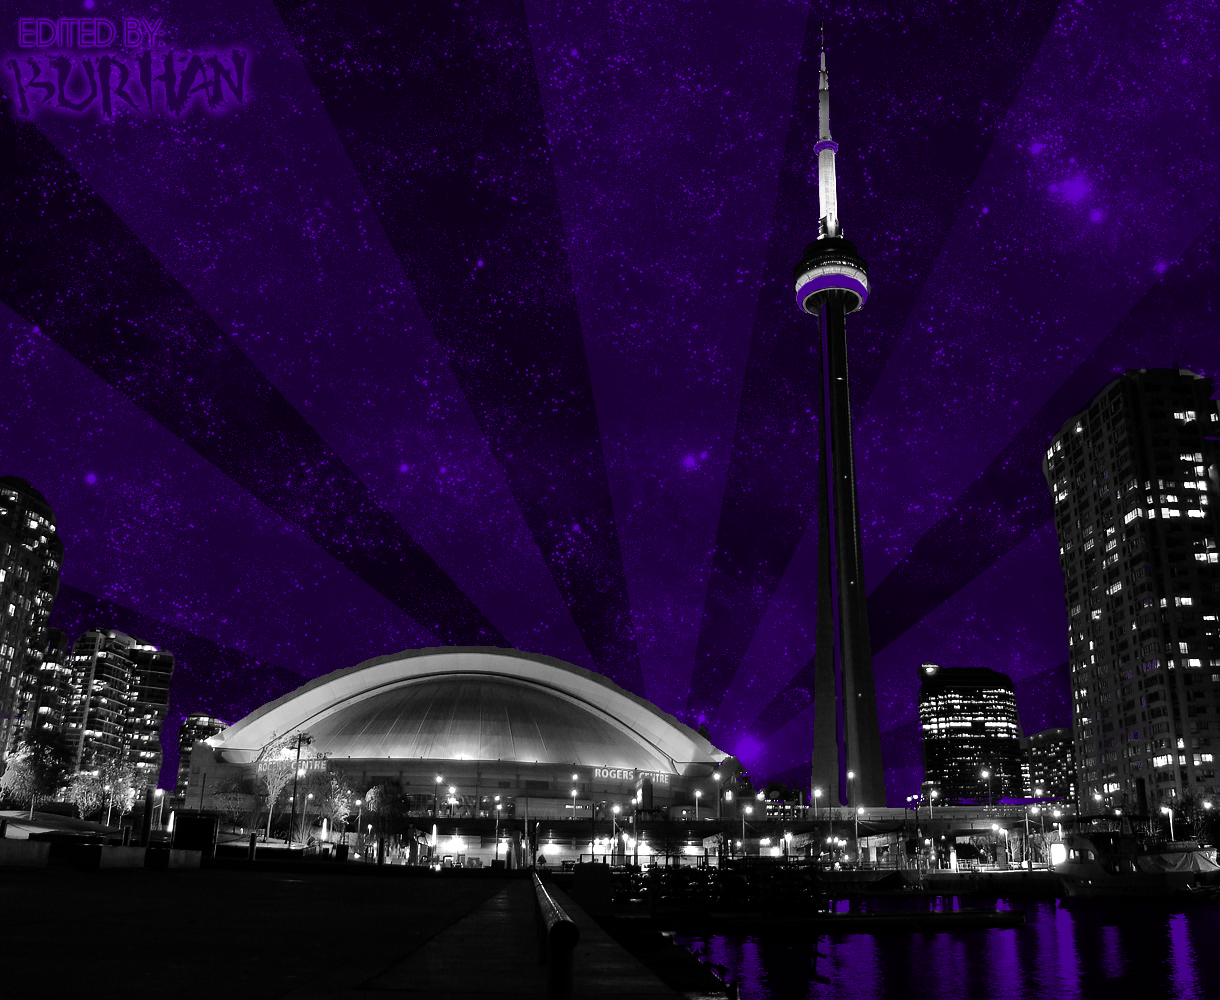 The Purple Side of Toronto